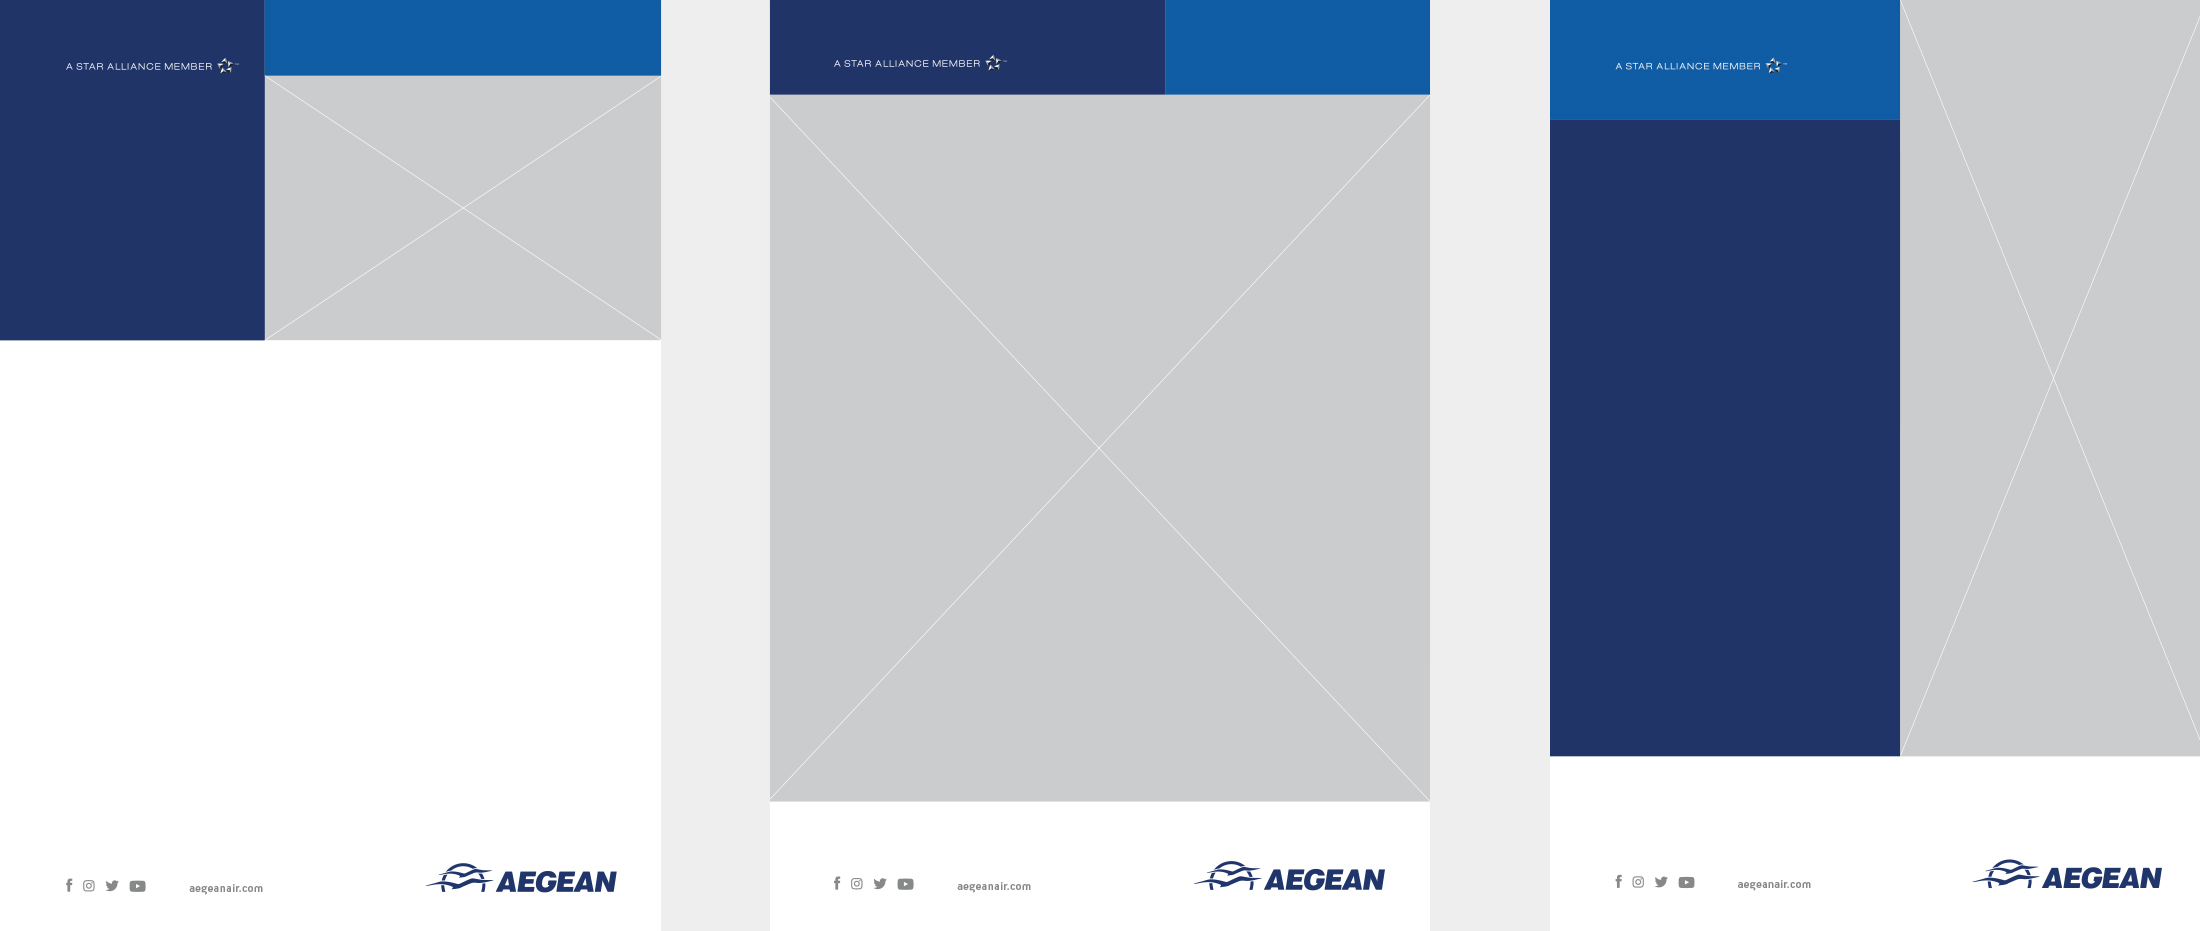 aegean air branding print ads sample kommigraphics